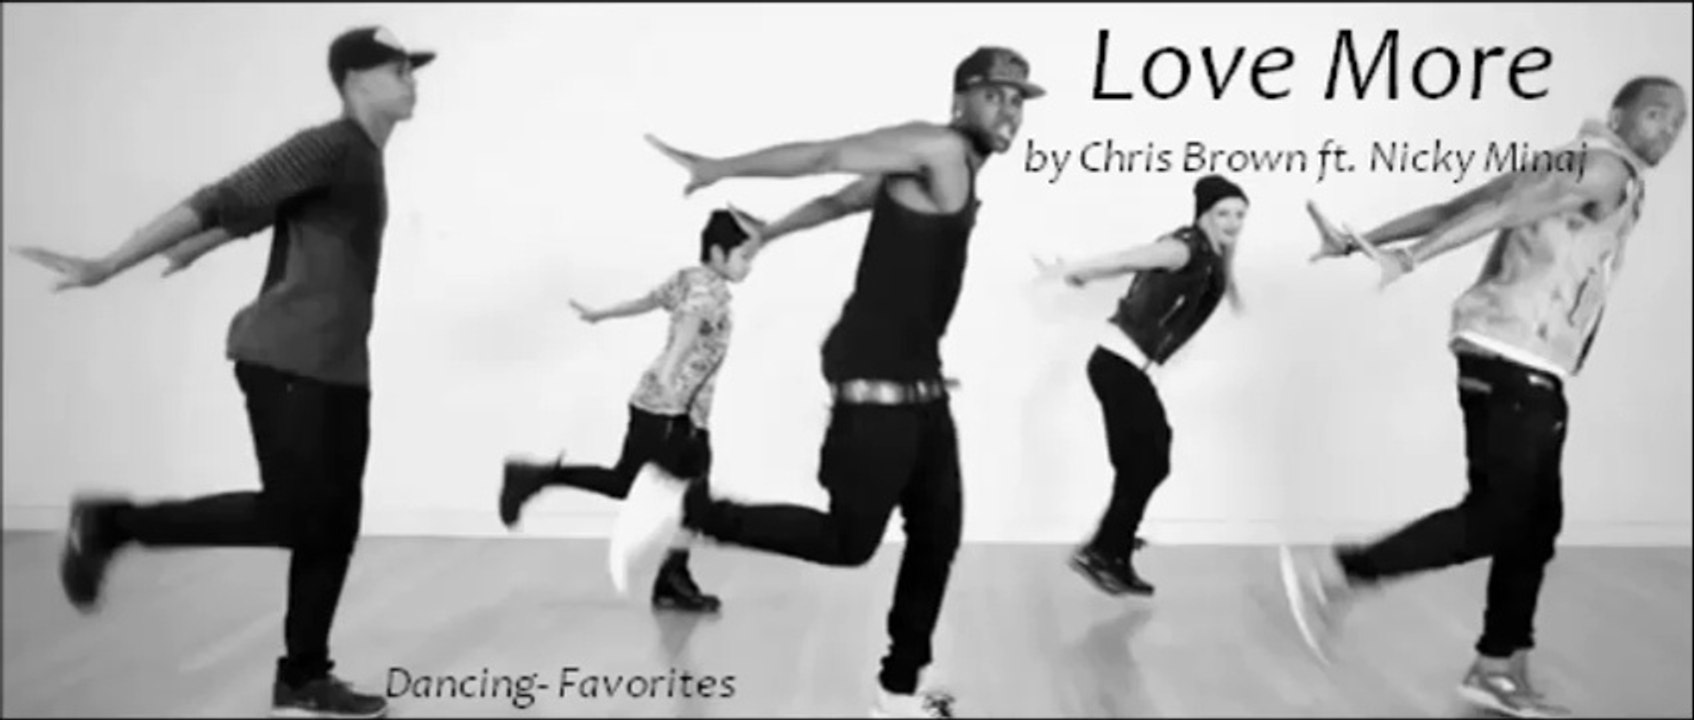 Love More by Chris Brown ft. Nicky Minaj (R&B - Favorites)